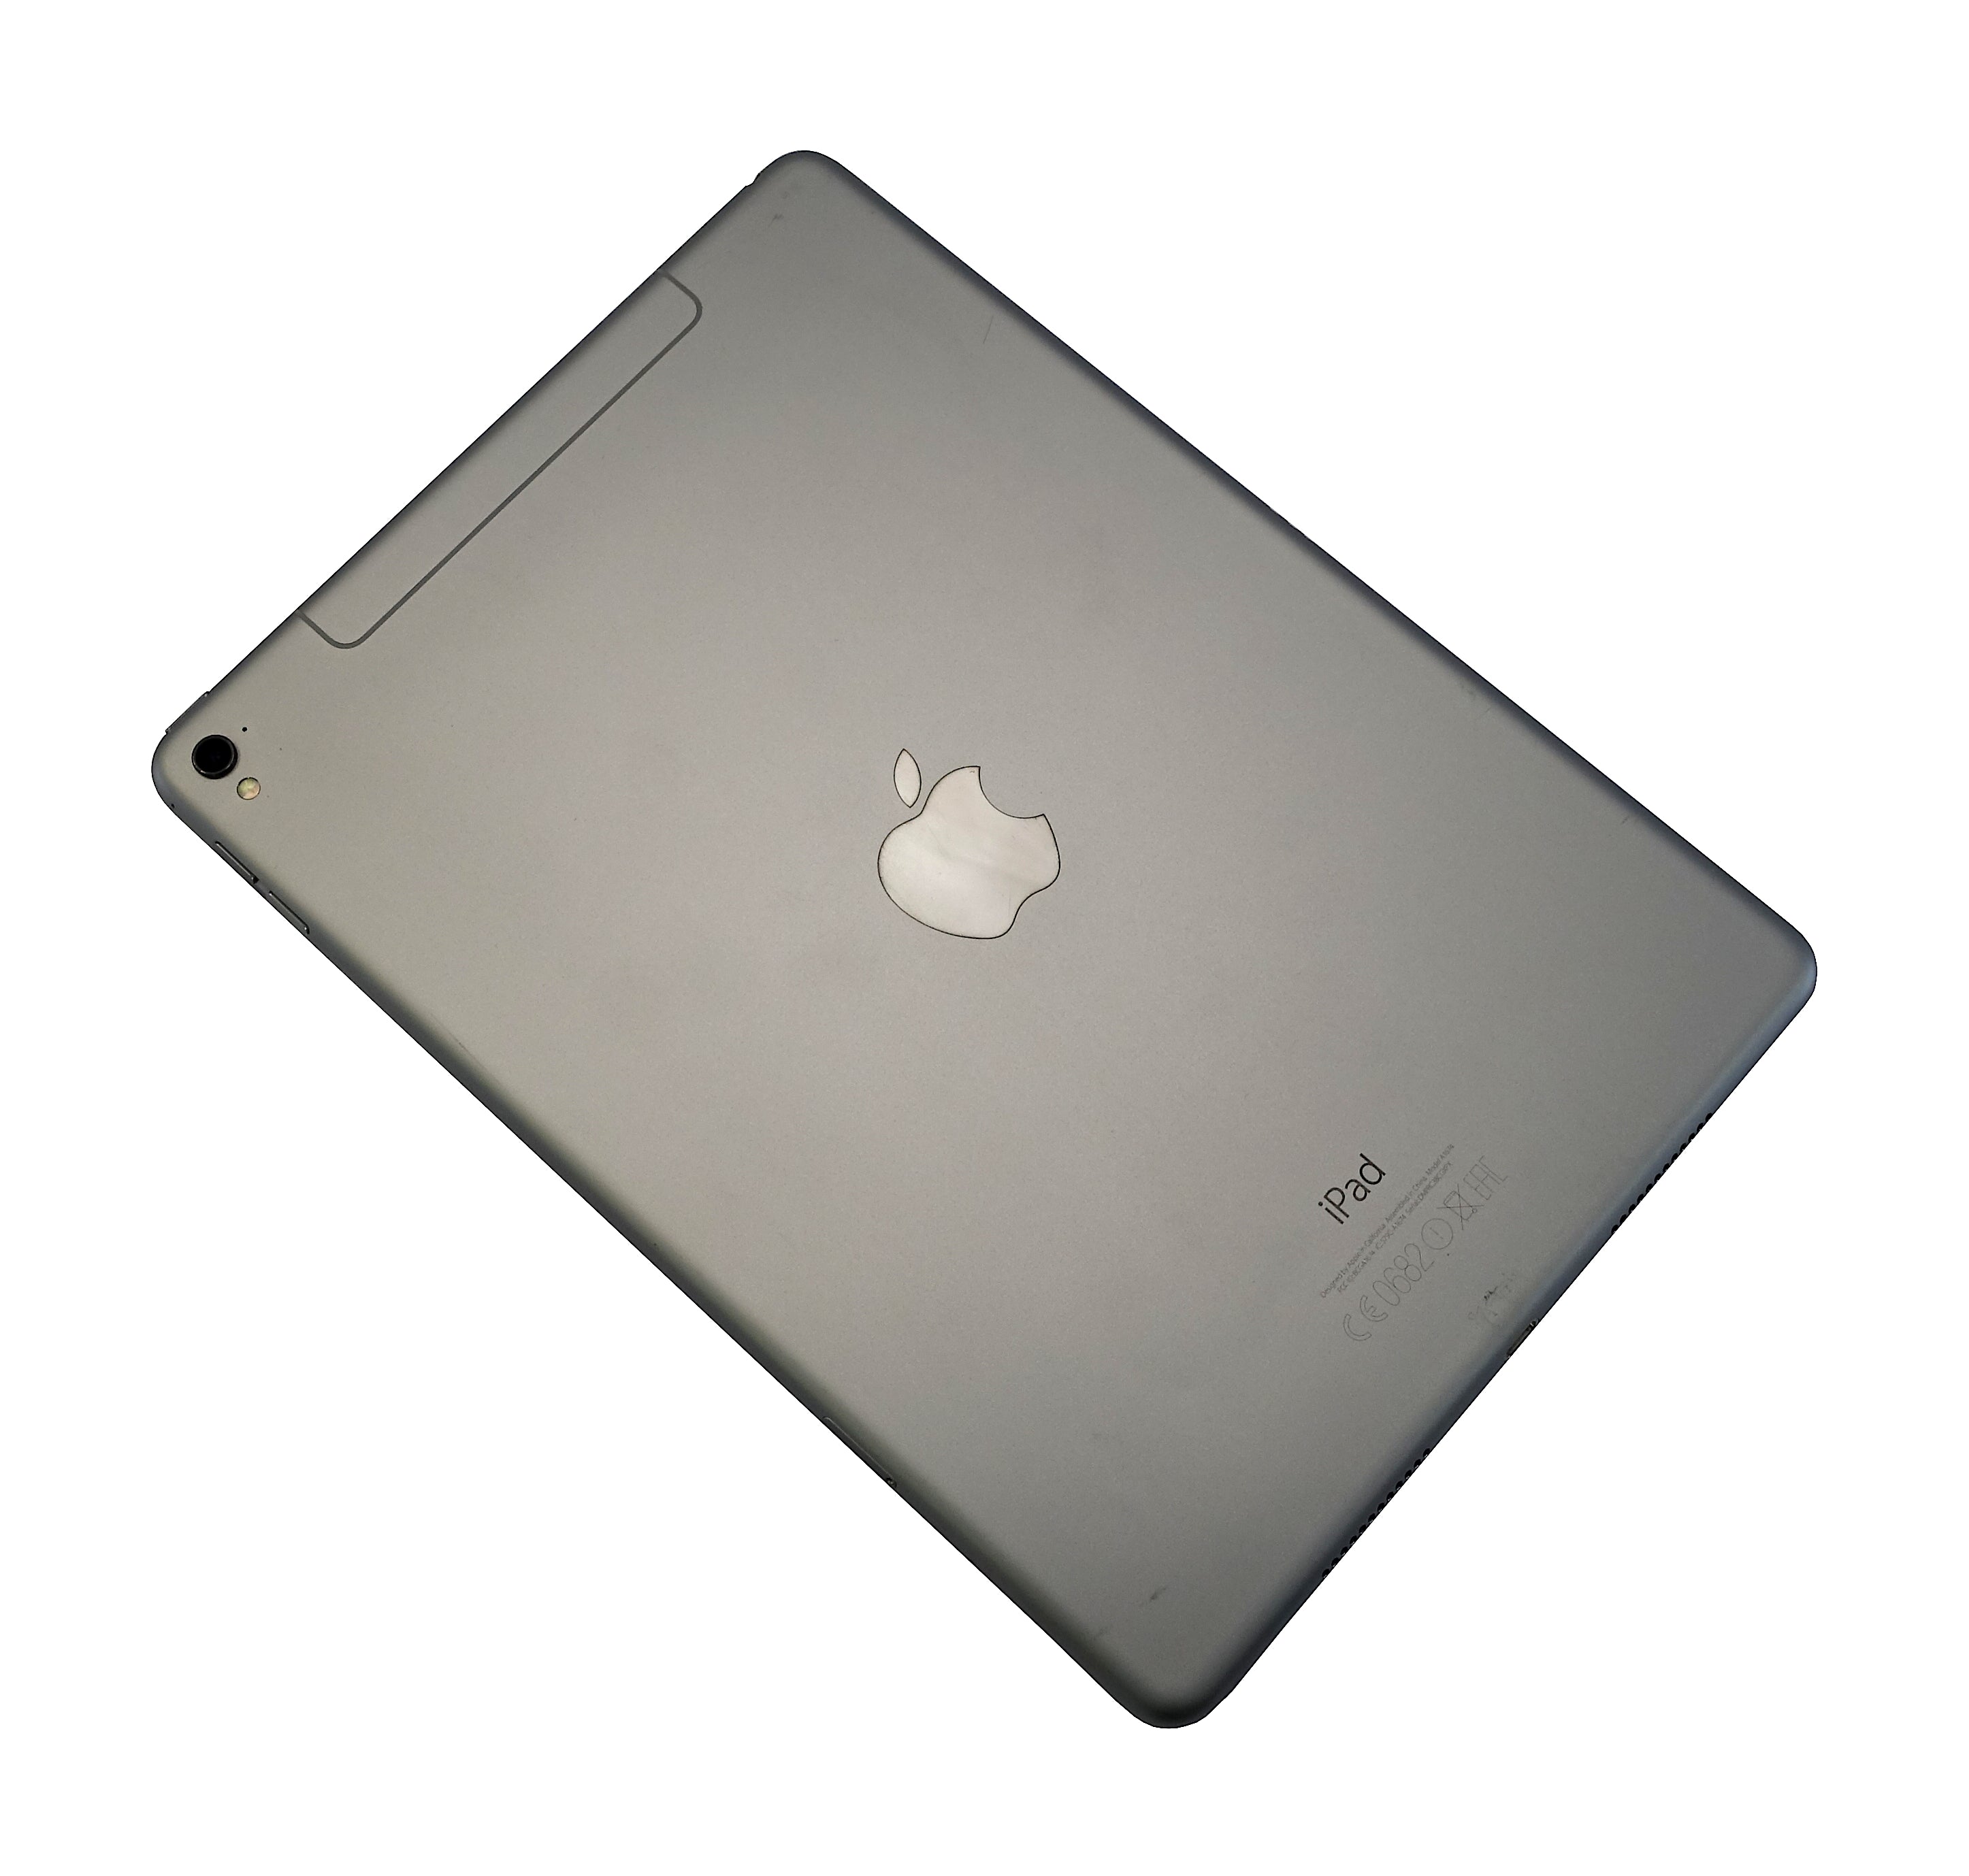 Apple iPad Pro 9.7" Tablet, 32GB, WiFi + GSM, Vodafone, Space Grey, A1674